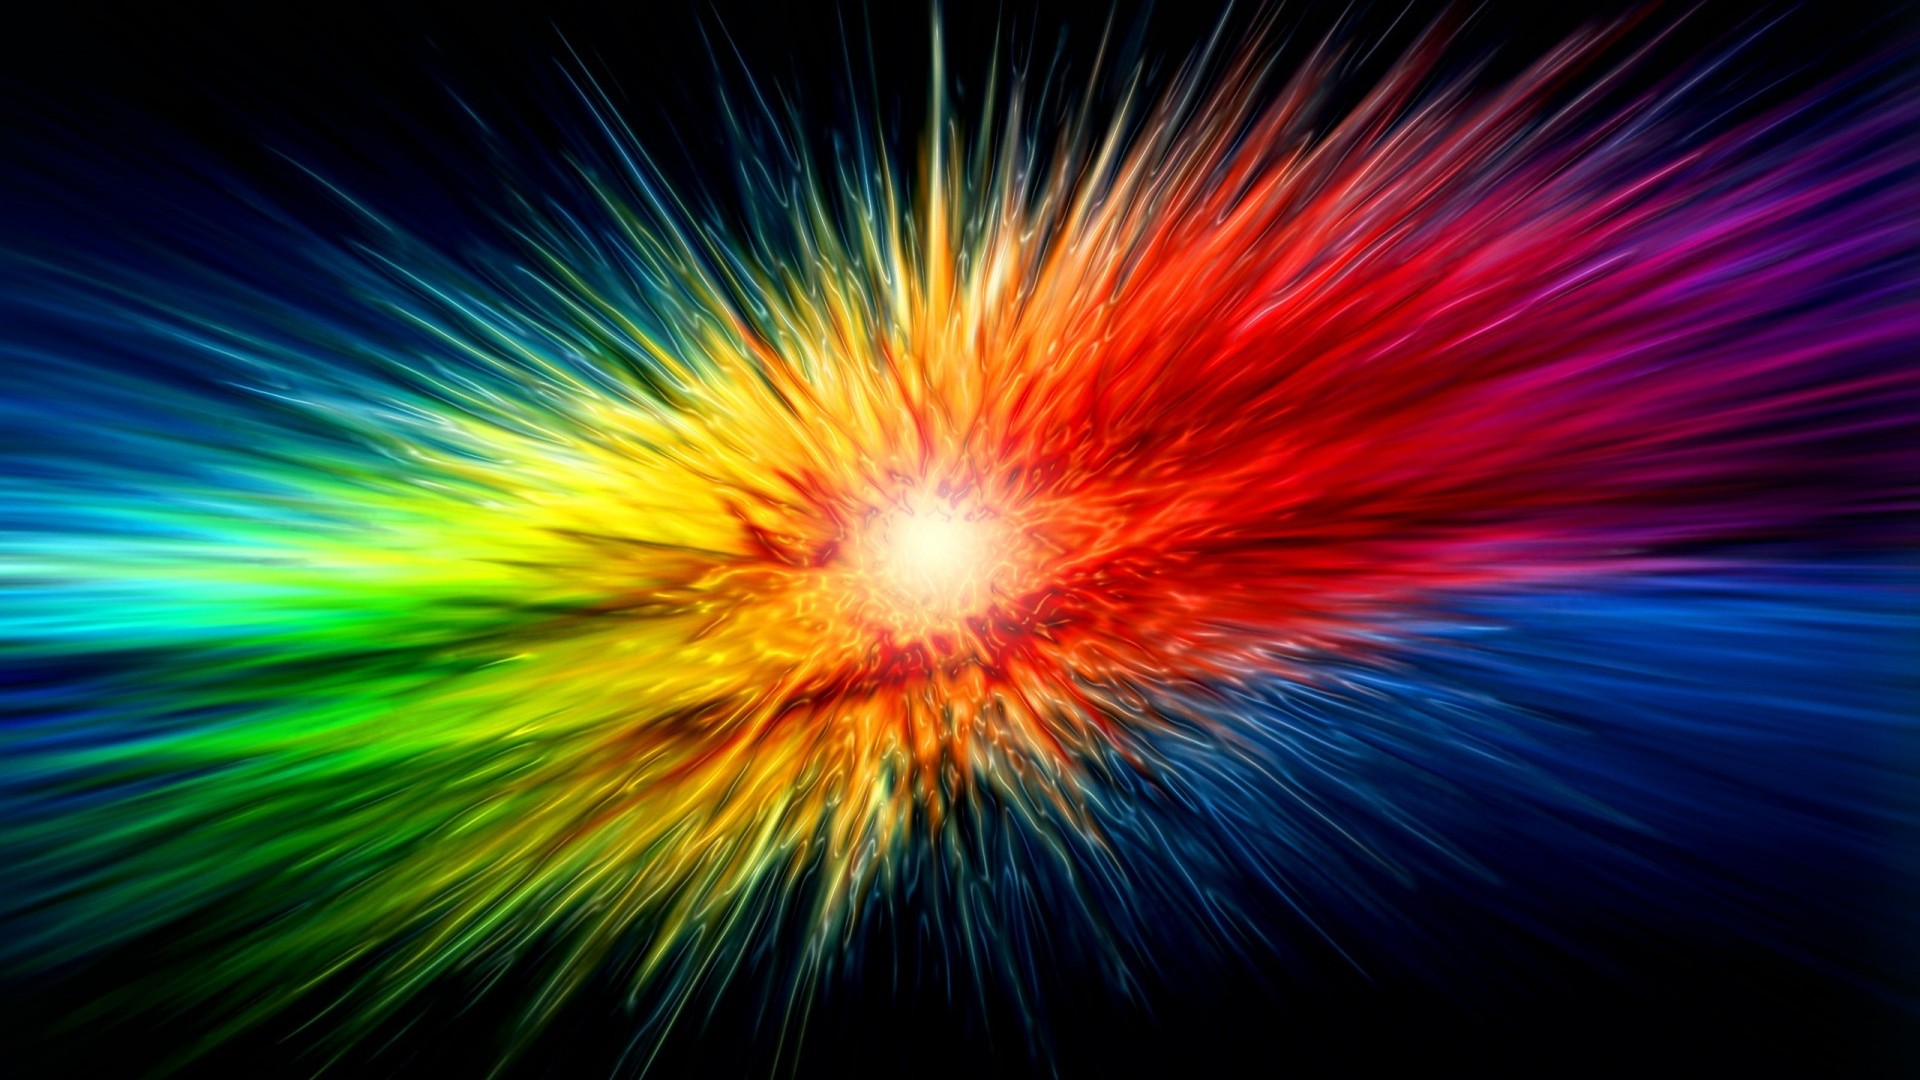 Supernova Rainbow Explosion HD Image Abstract 3d